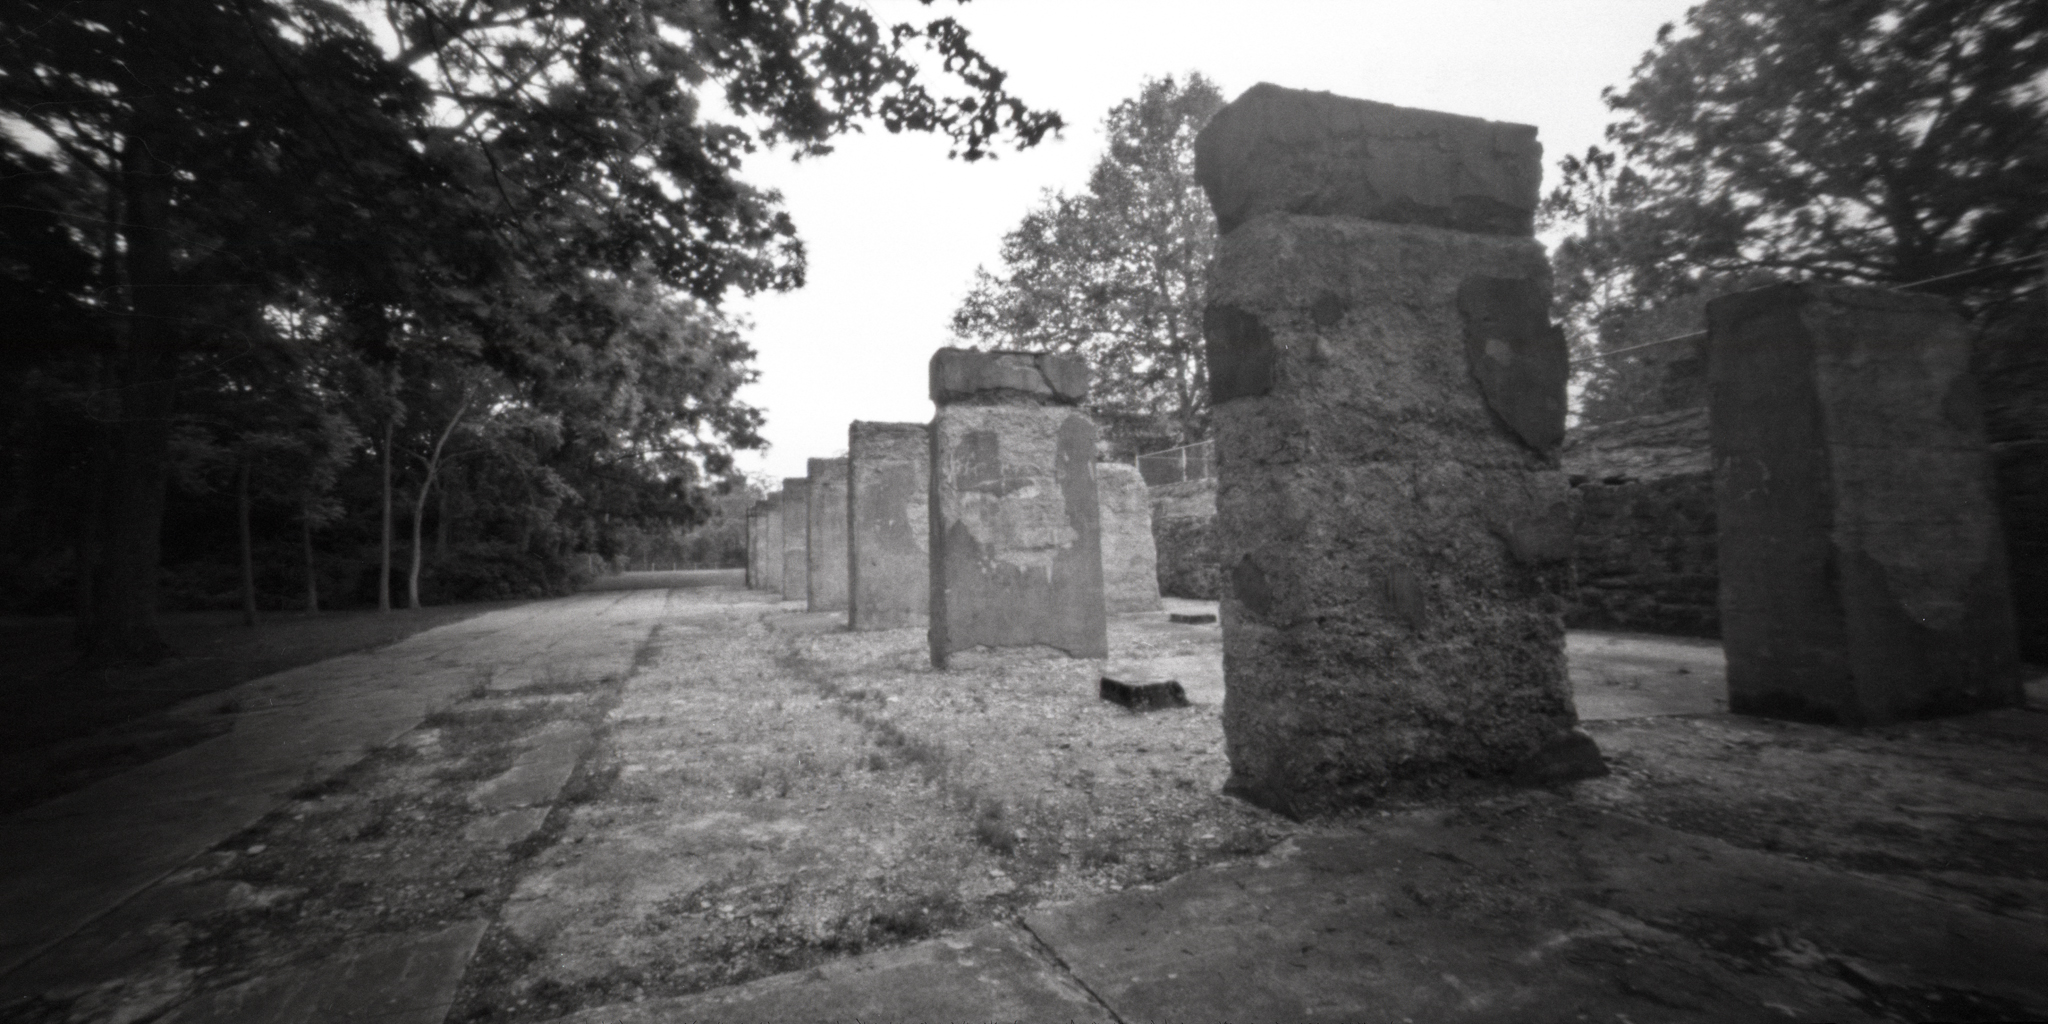  Lockridge Furnace ruins.&nbsp; Alburtis, Pennsylvania.&nbsp; Zero Image 6x18D in 6x12 mode.&nbsp; 